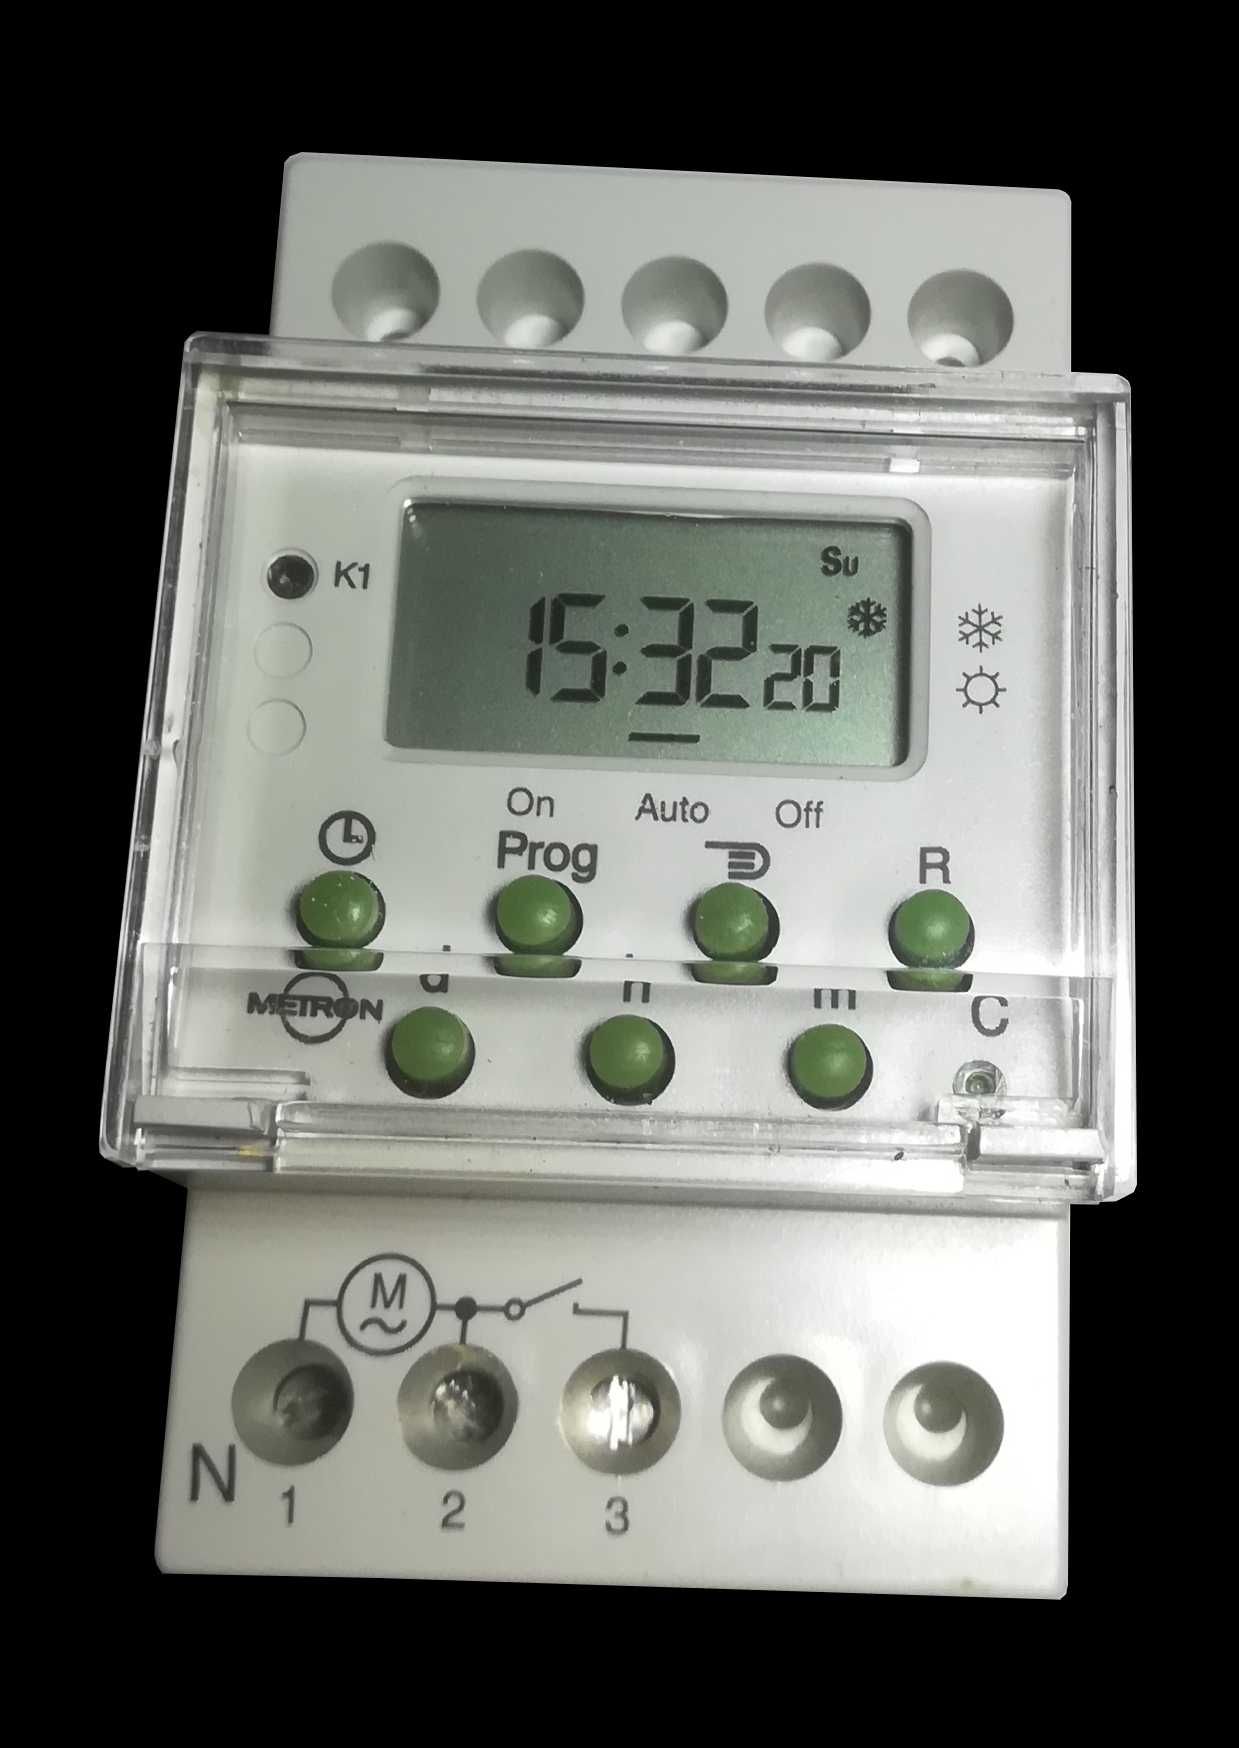 Zegar programator czasowy METRON PCm 05 Do akwarium terrarium